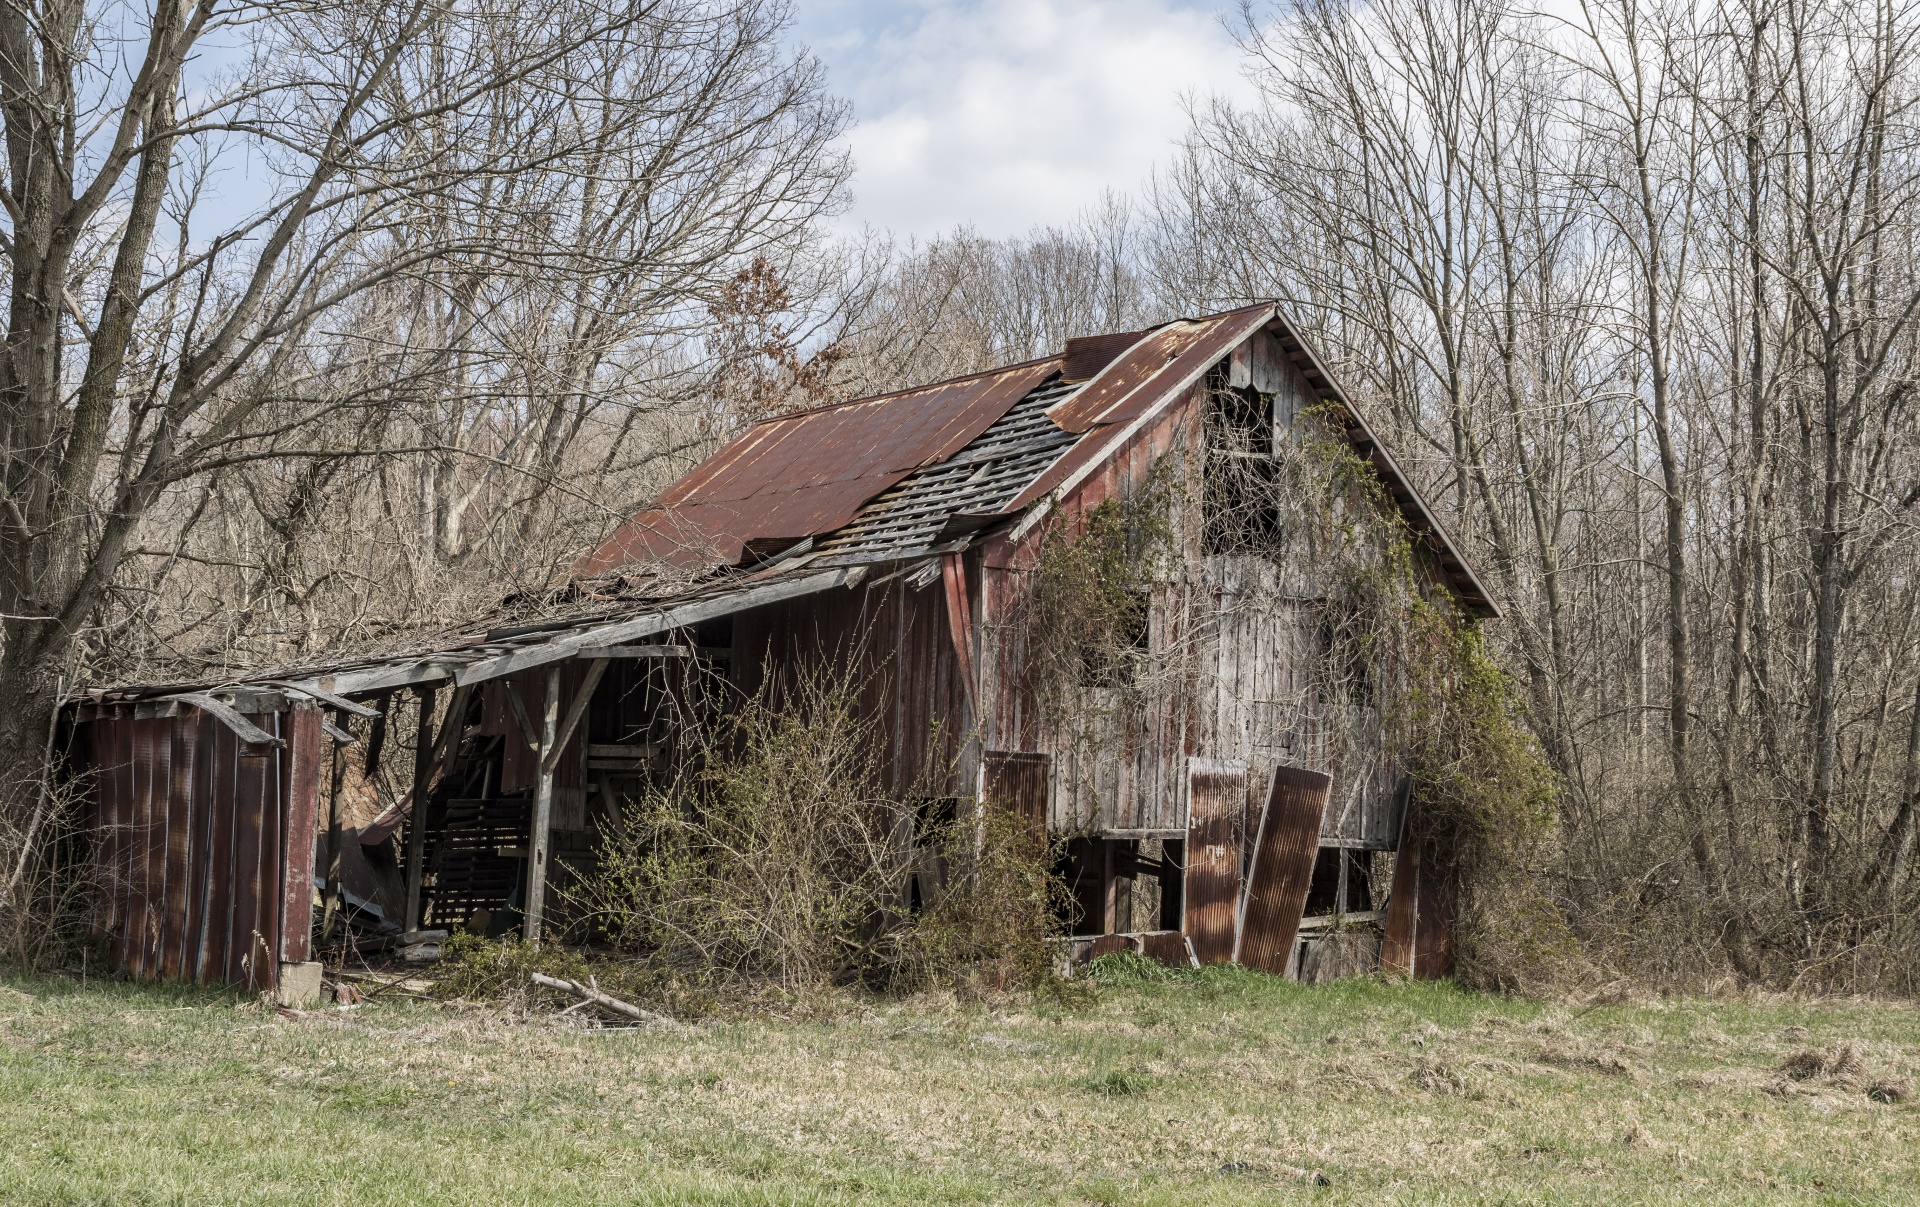 Rural decay.